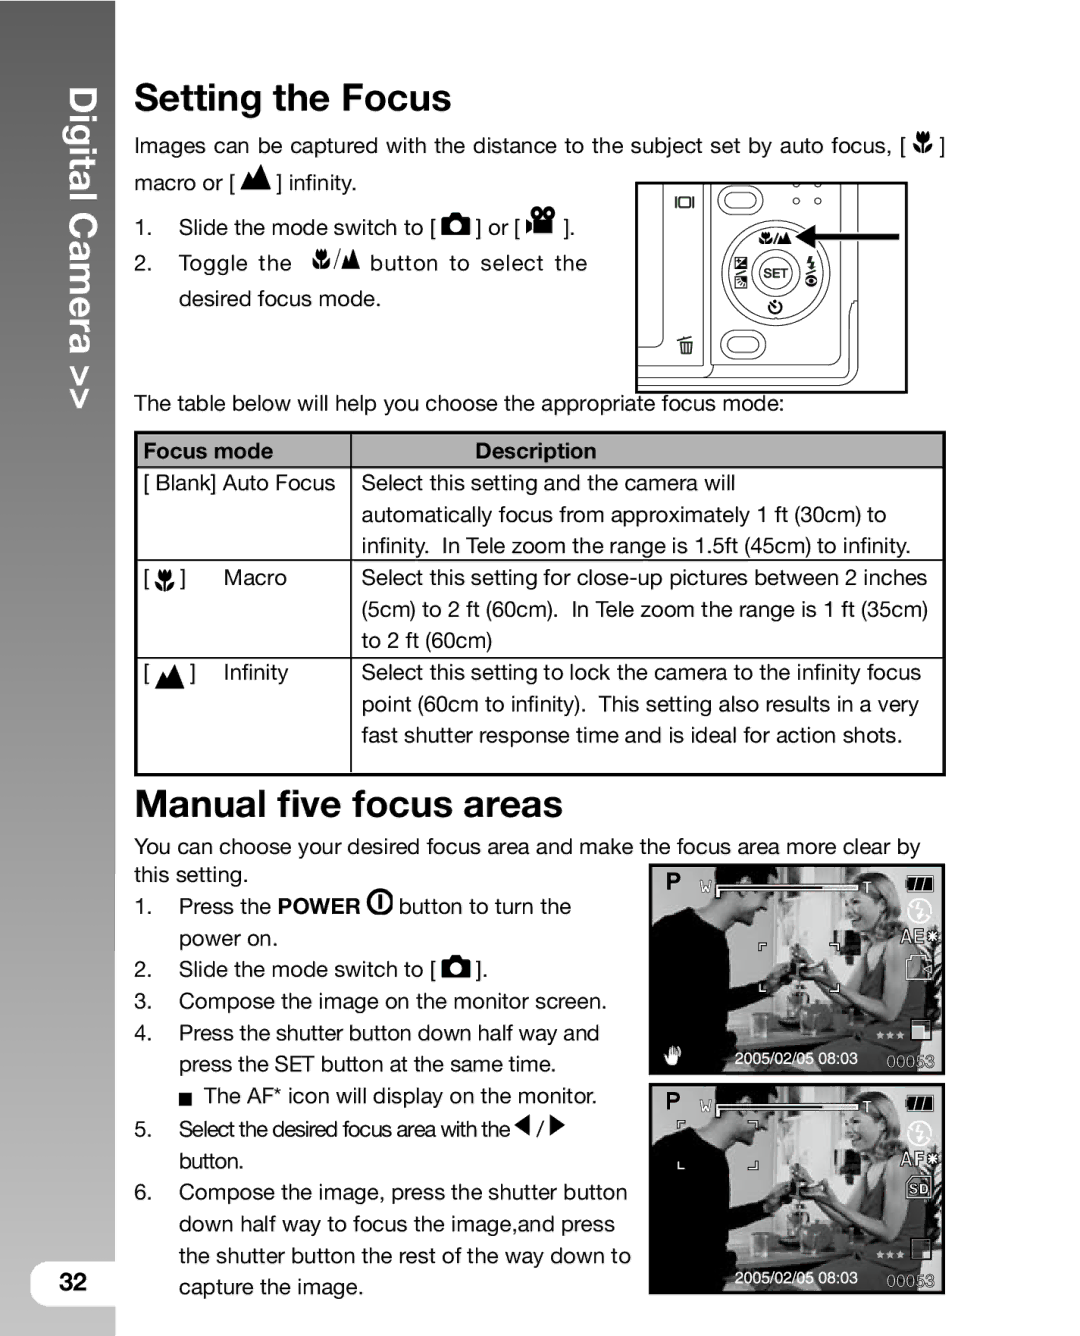 Sealife DC 600 manual Setting the Focus, Manual ﬁve focus areas, Focus mode Description 